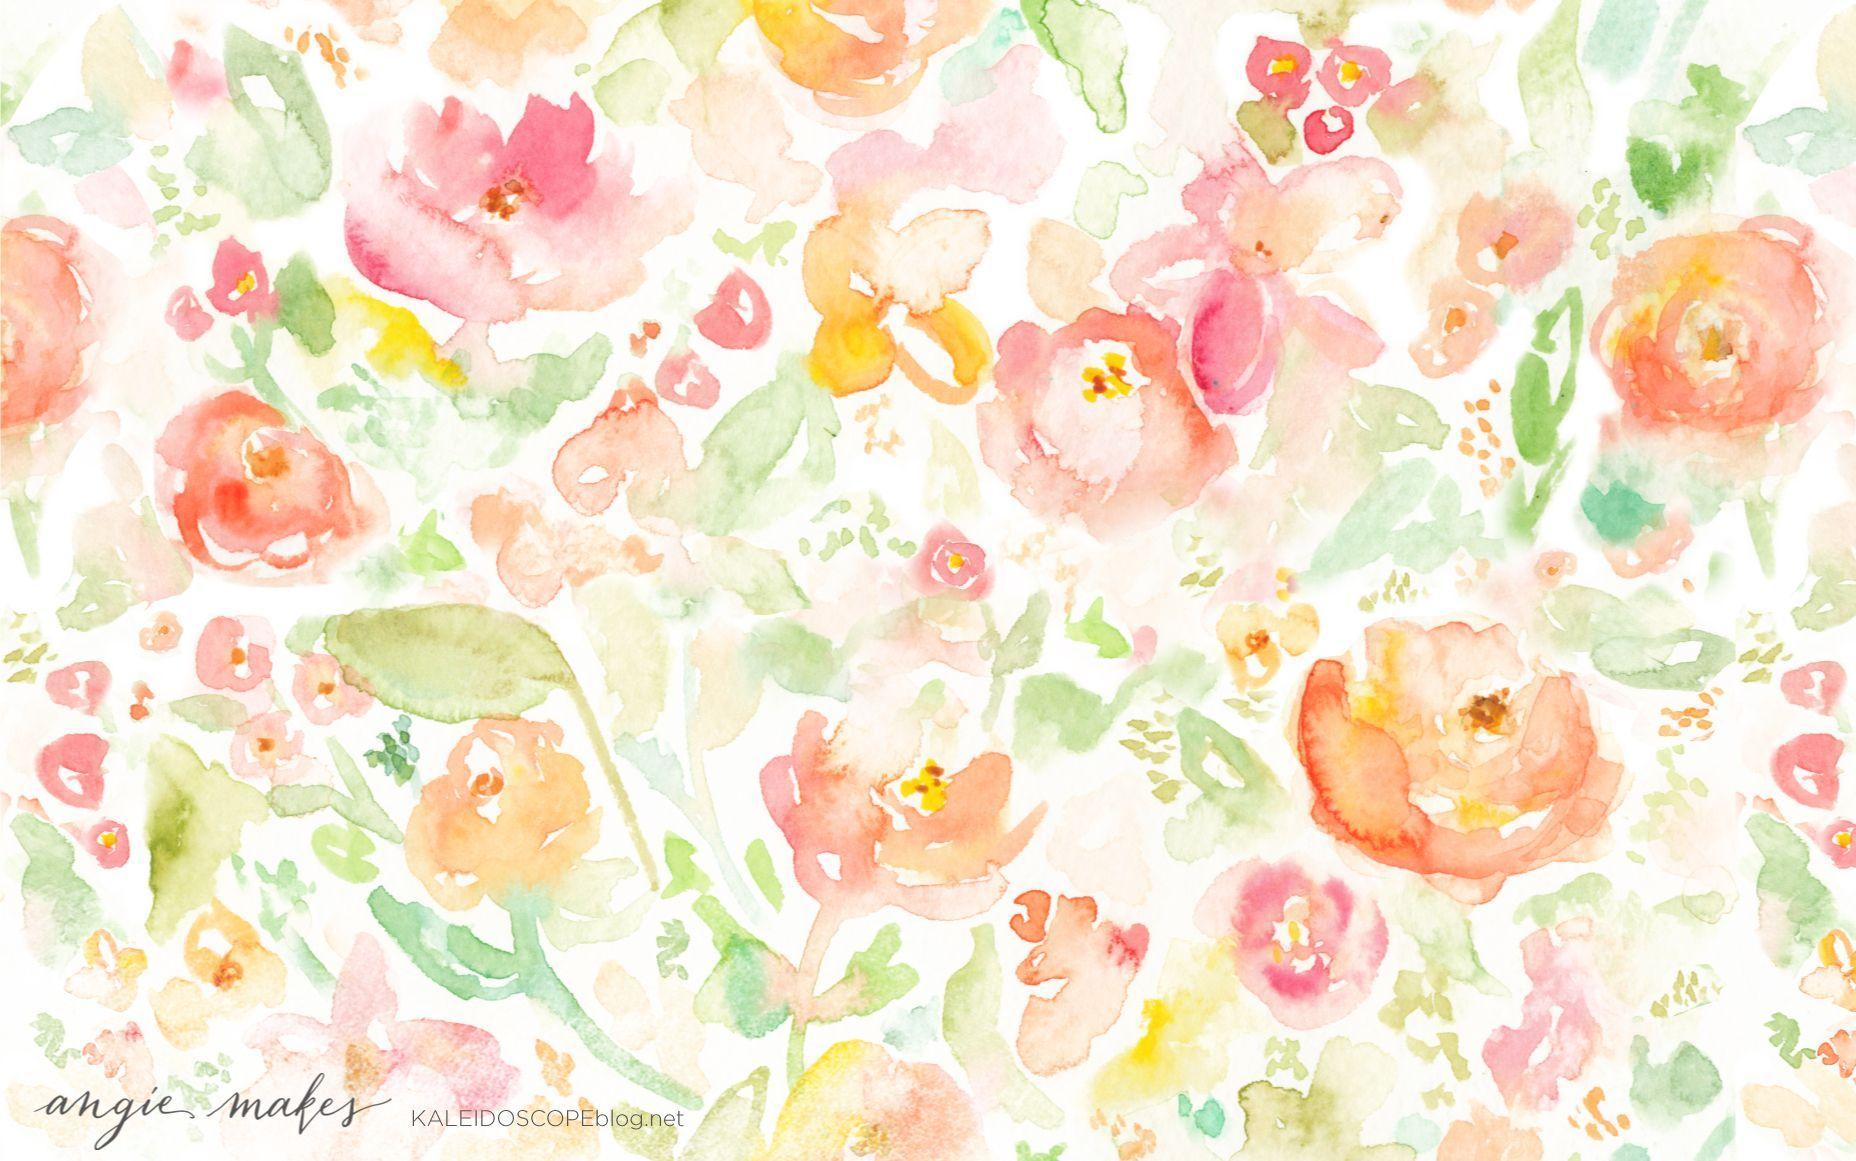 16 Dark Floral Wallpaper Designs at Wallsauce  Wallsauce US